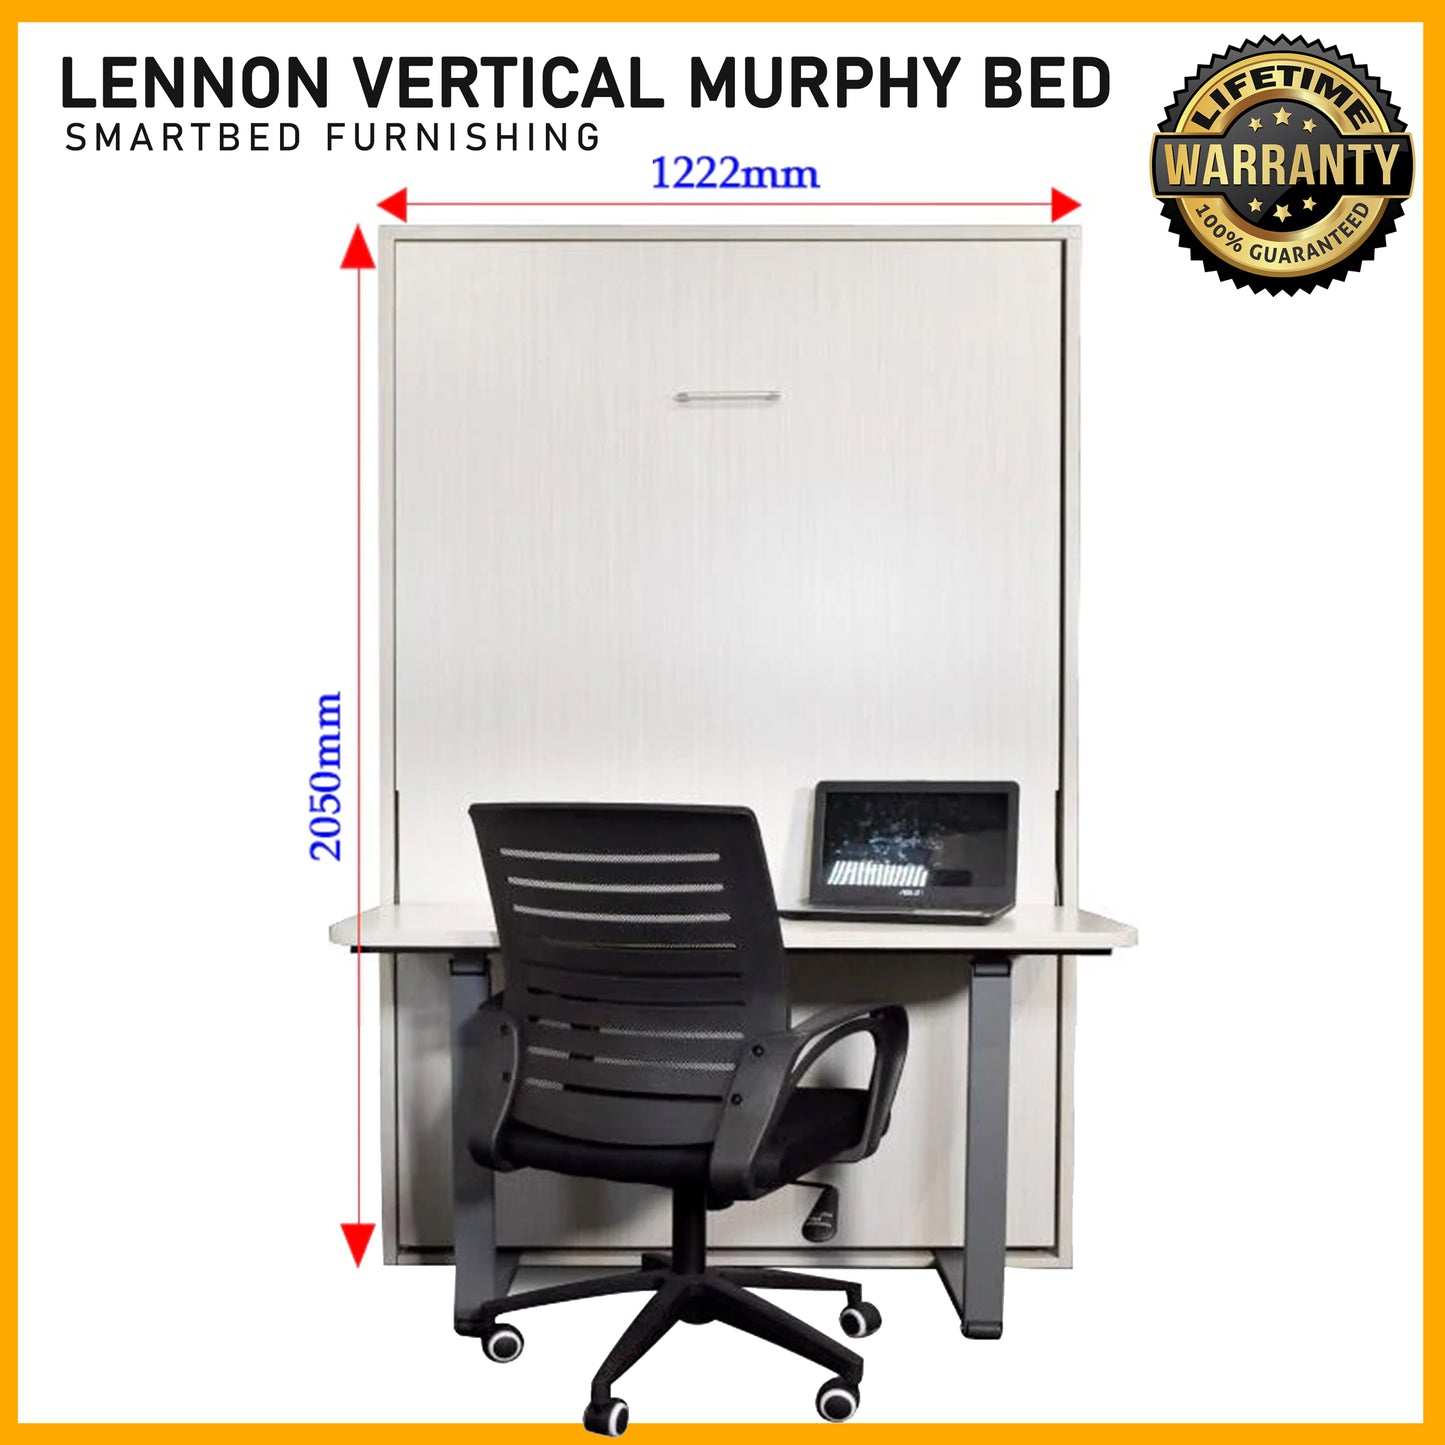 SMARTBED | Lennon Vertical Murphy Bed